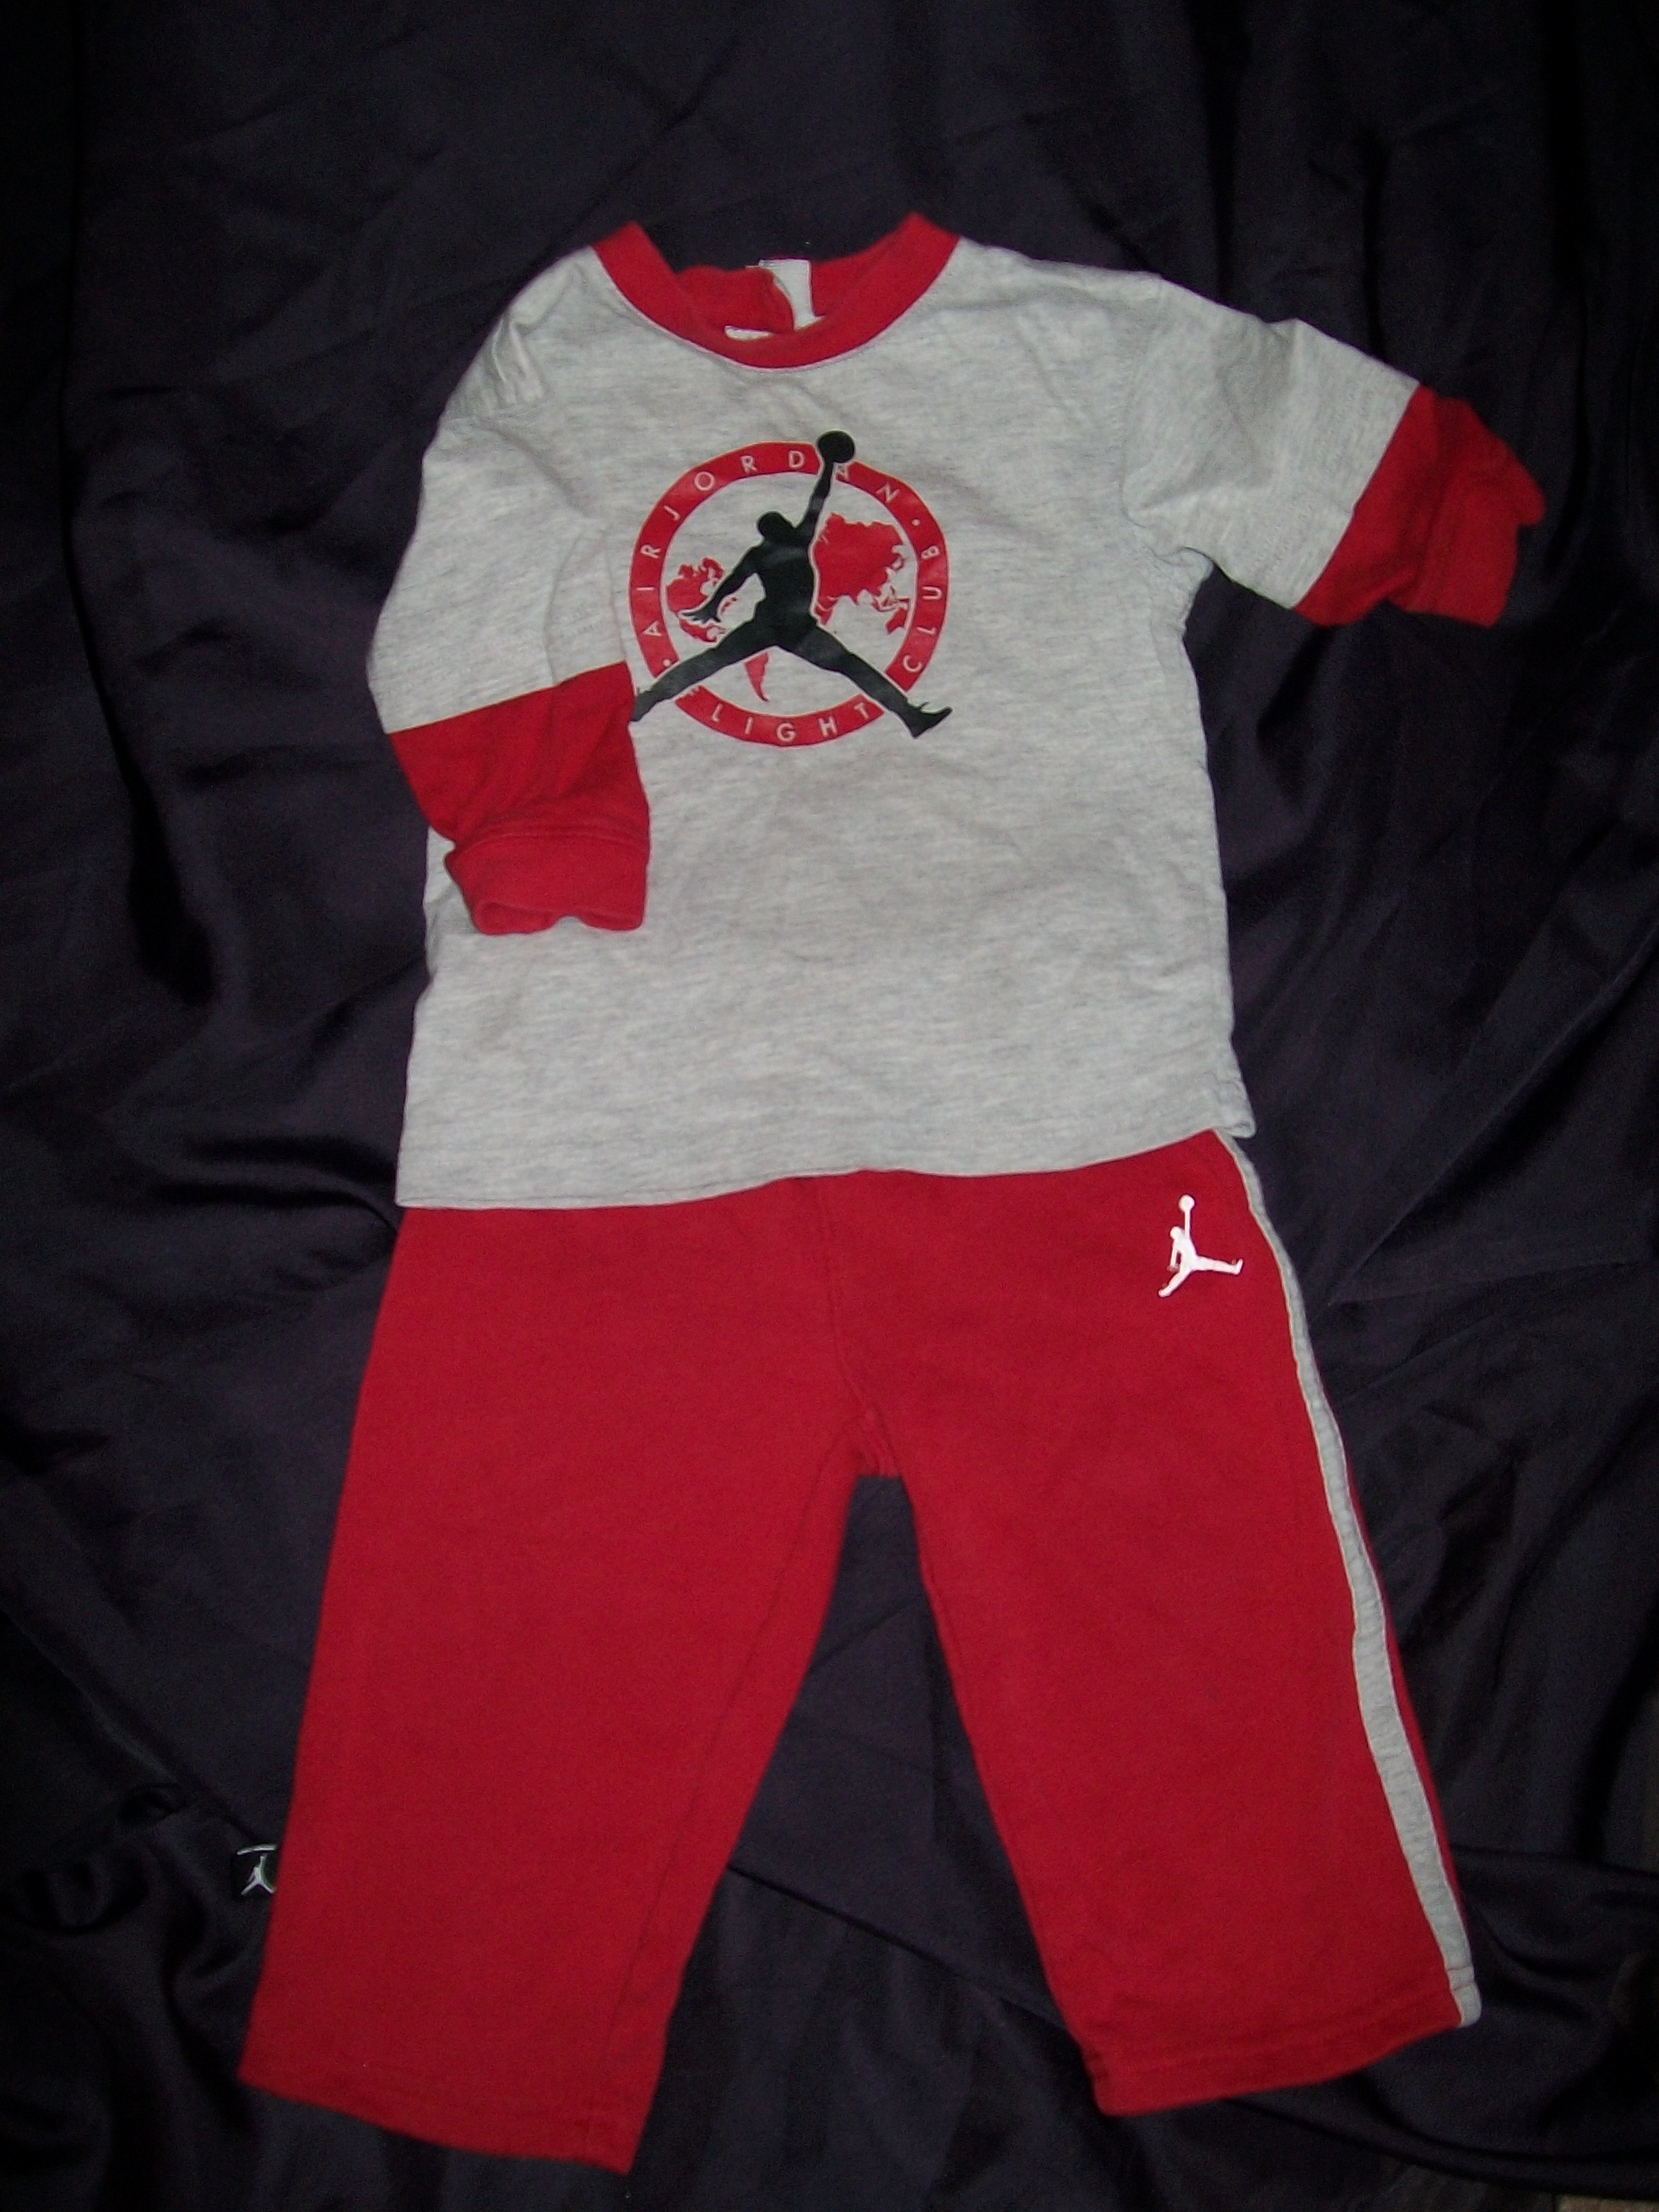 Toddler Boys Air Jordan Outfit